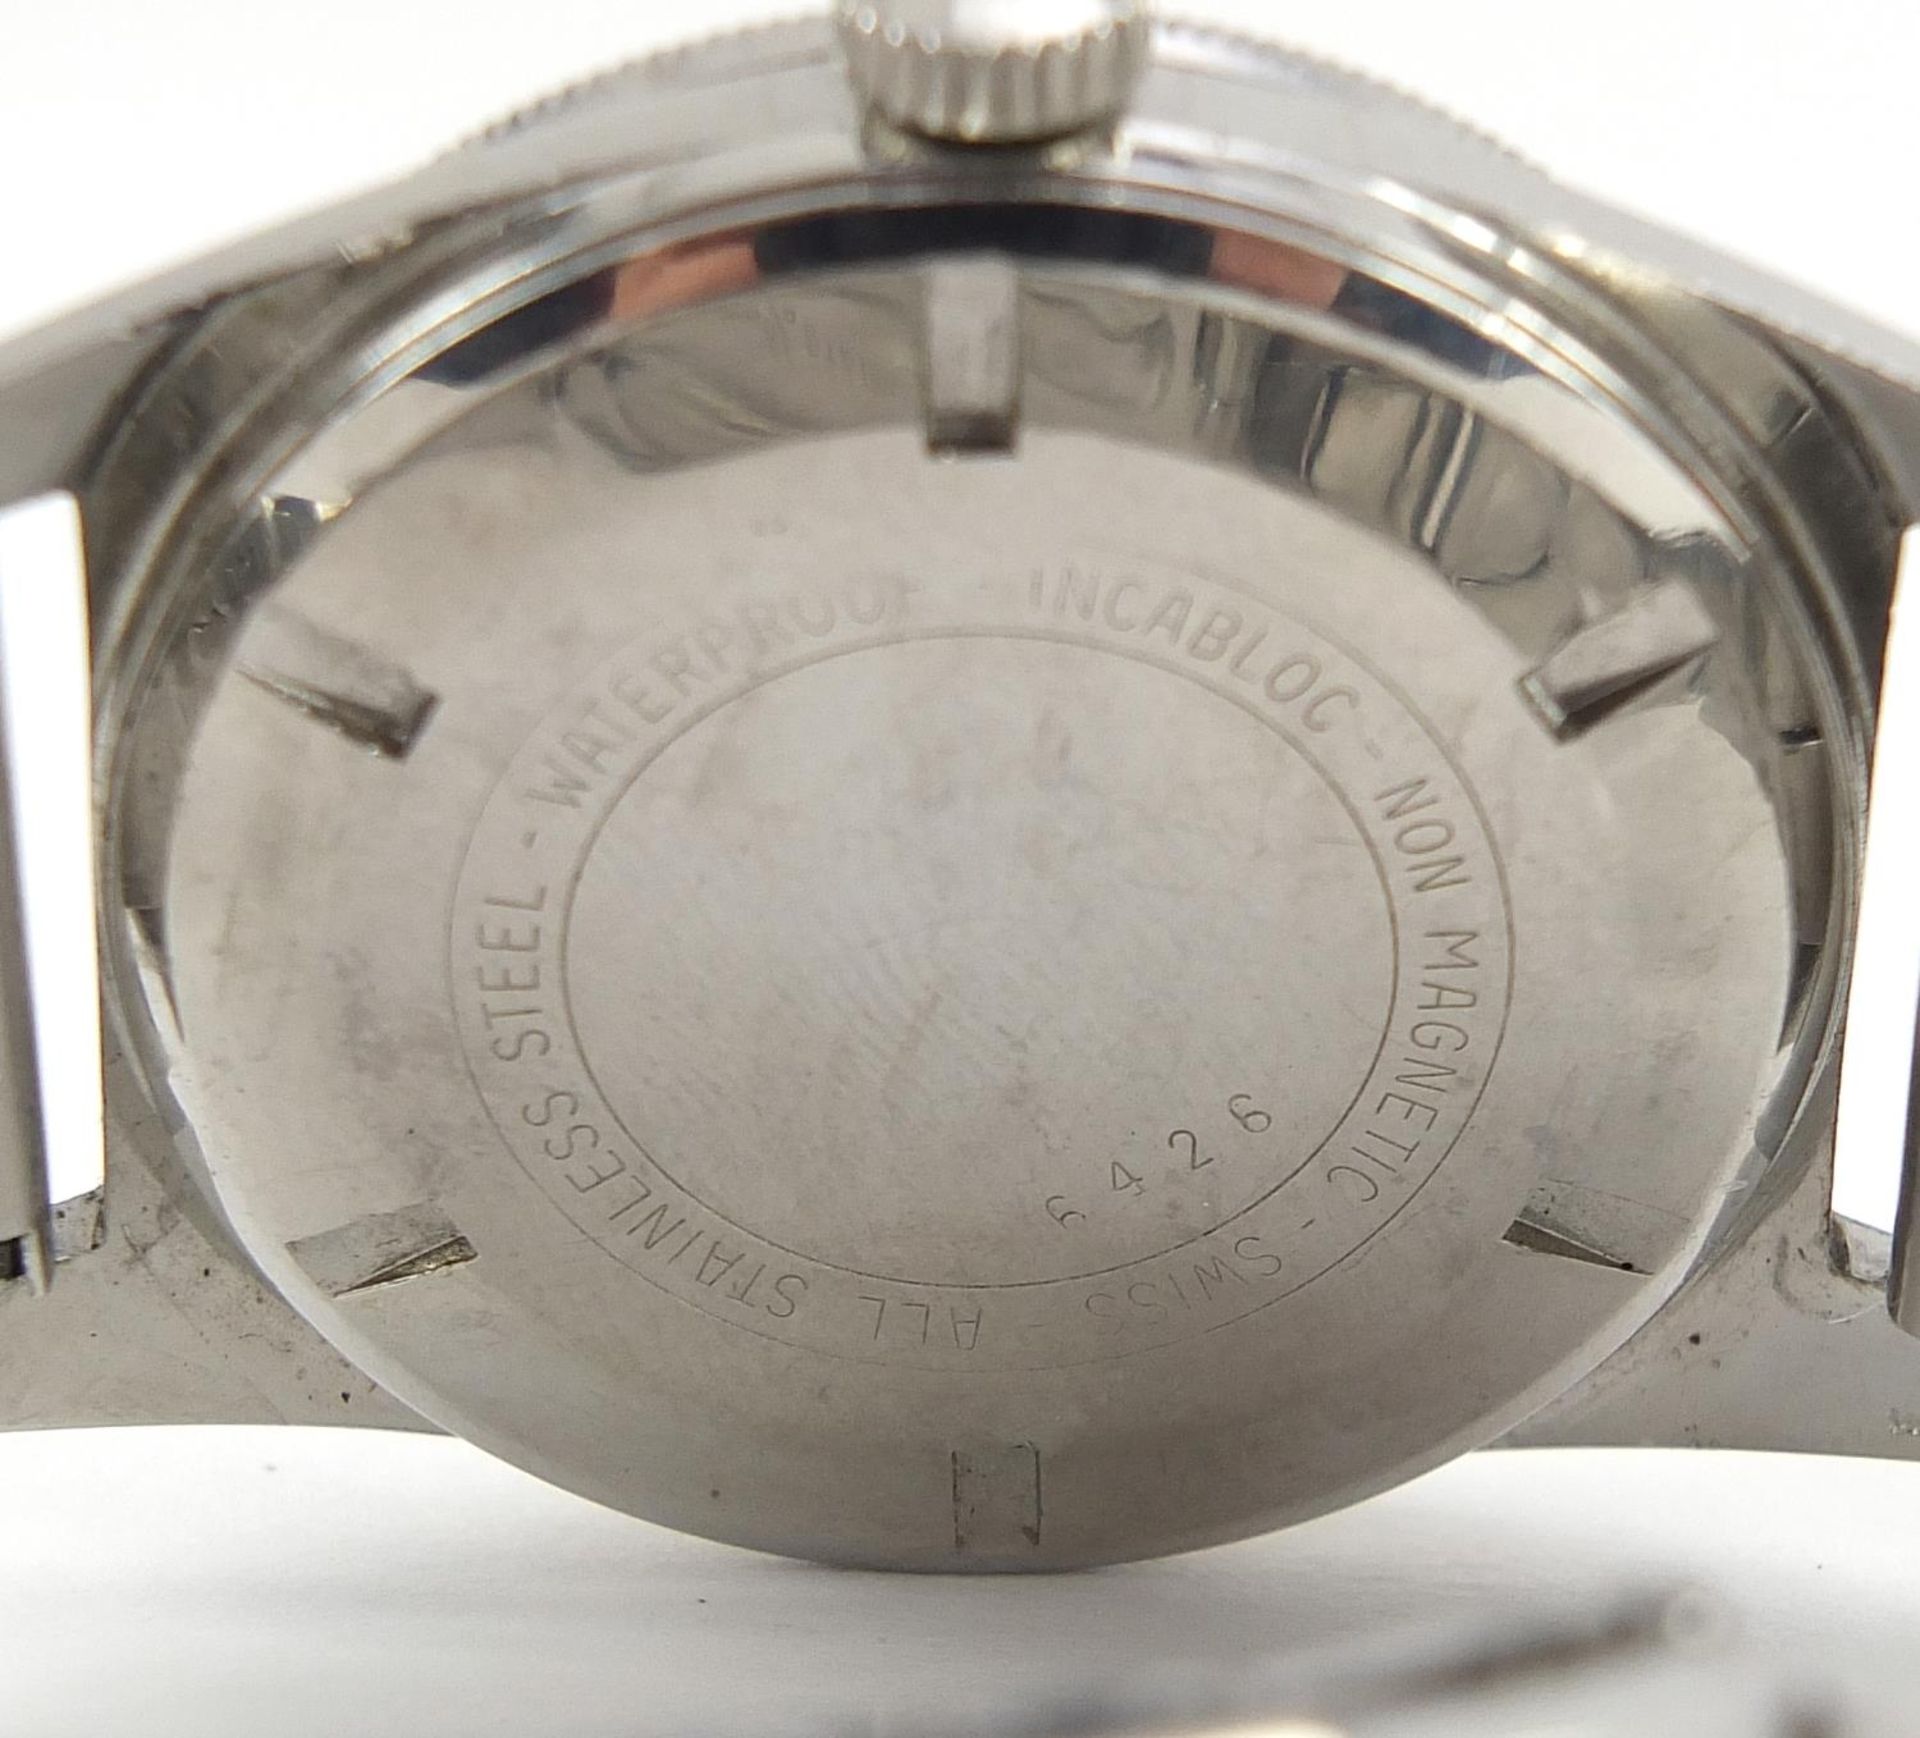 Marc Nicolet, gentlemen's Skin Diver automatic wristwatch with date aperture, 35mm in diameter - Image 4 of 5